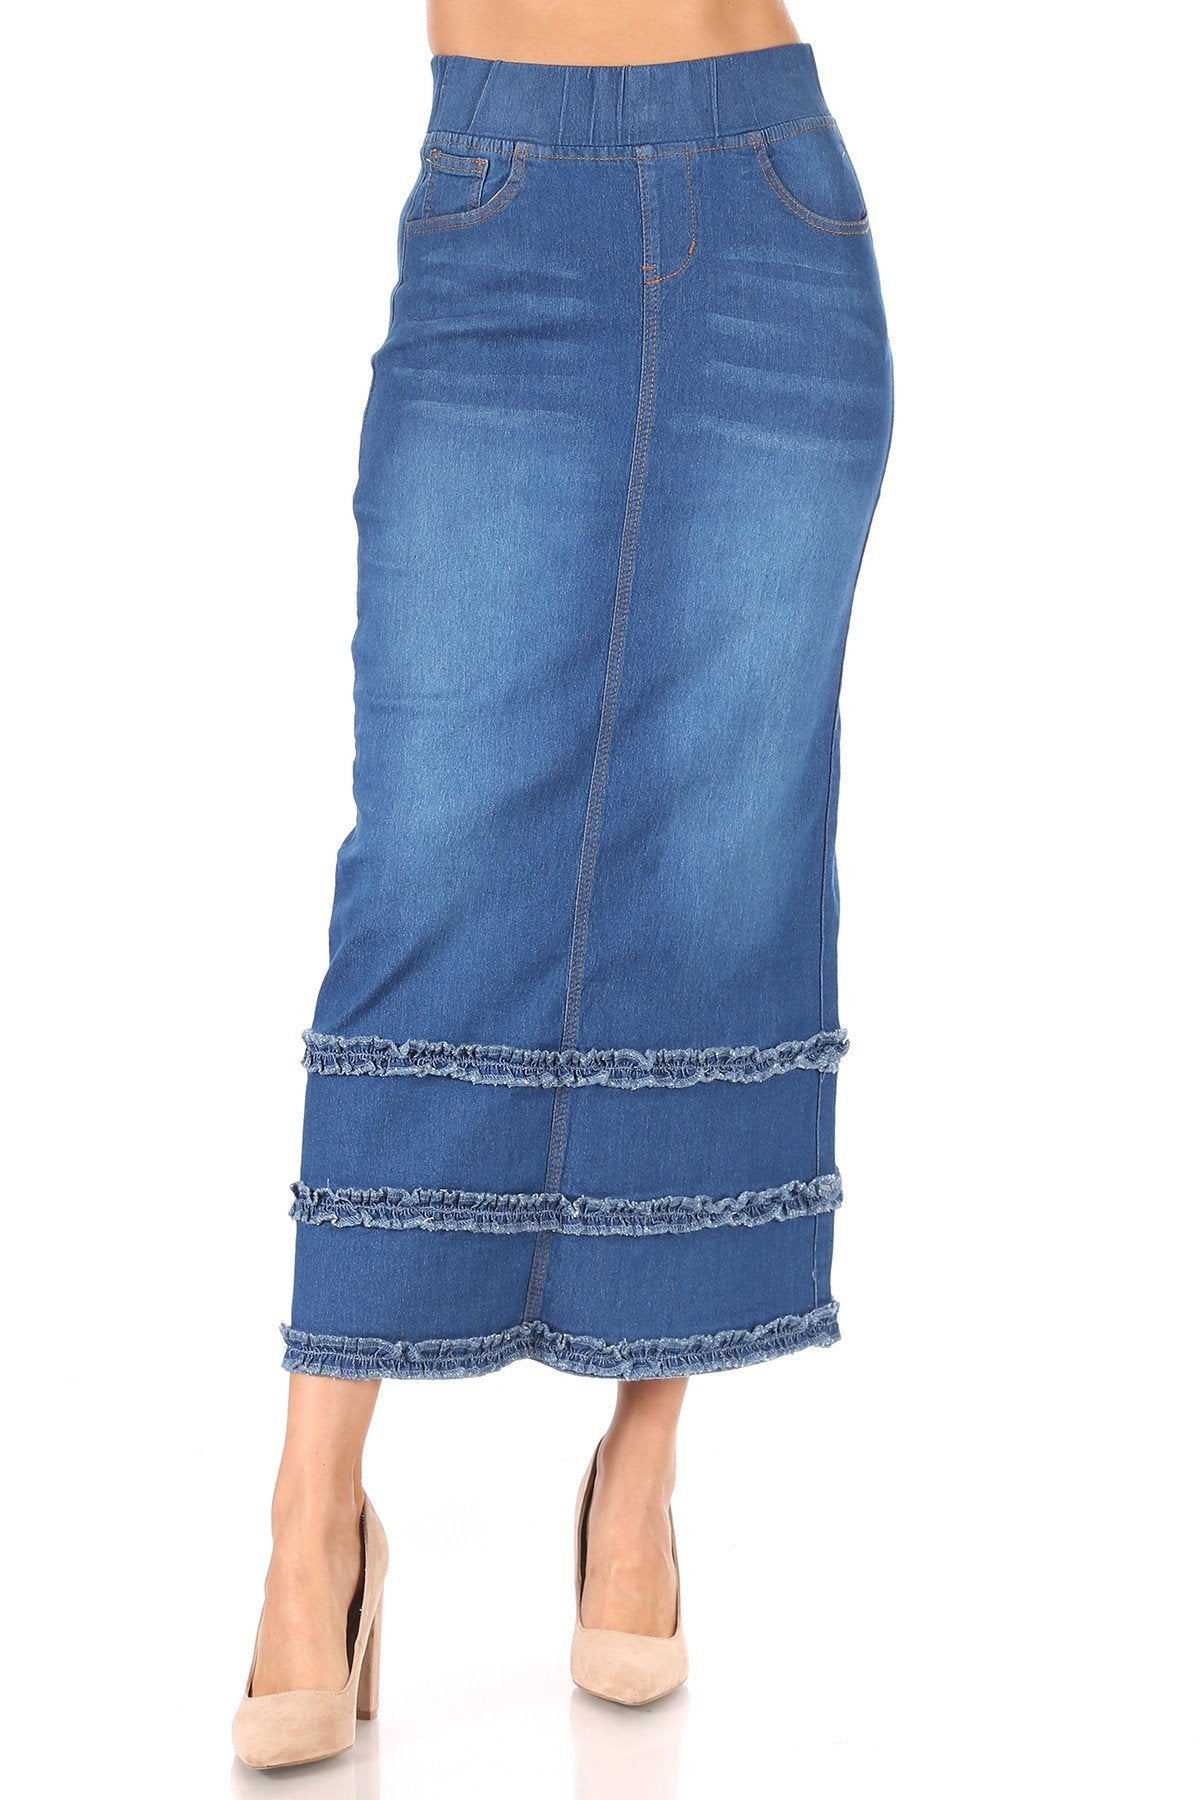 Long denim skirt (Stretch Cotton) ANA & LUCY | Paris Fashion Shops